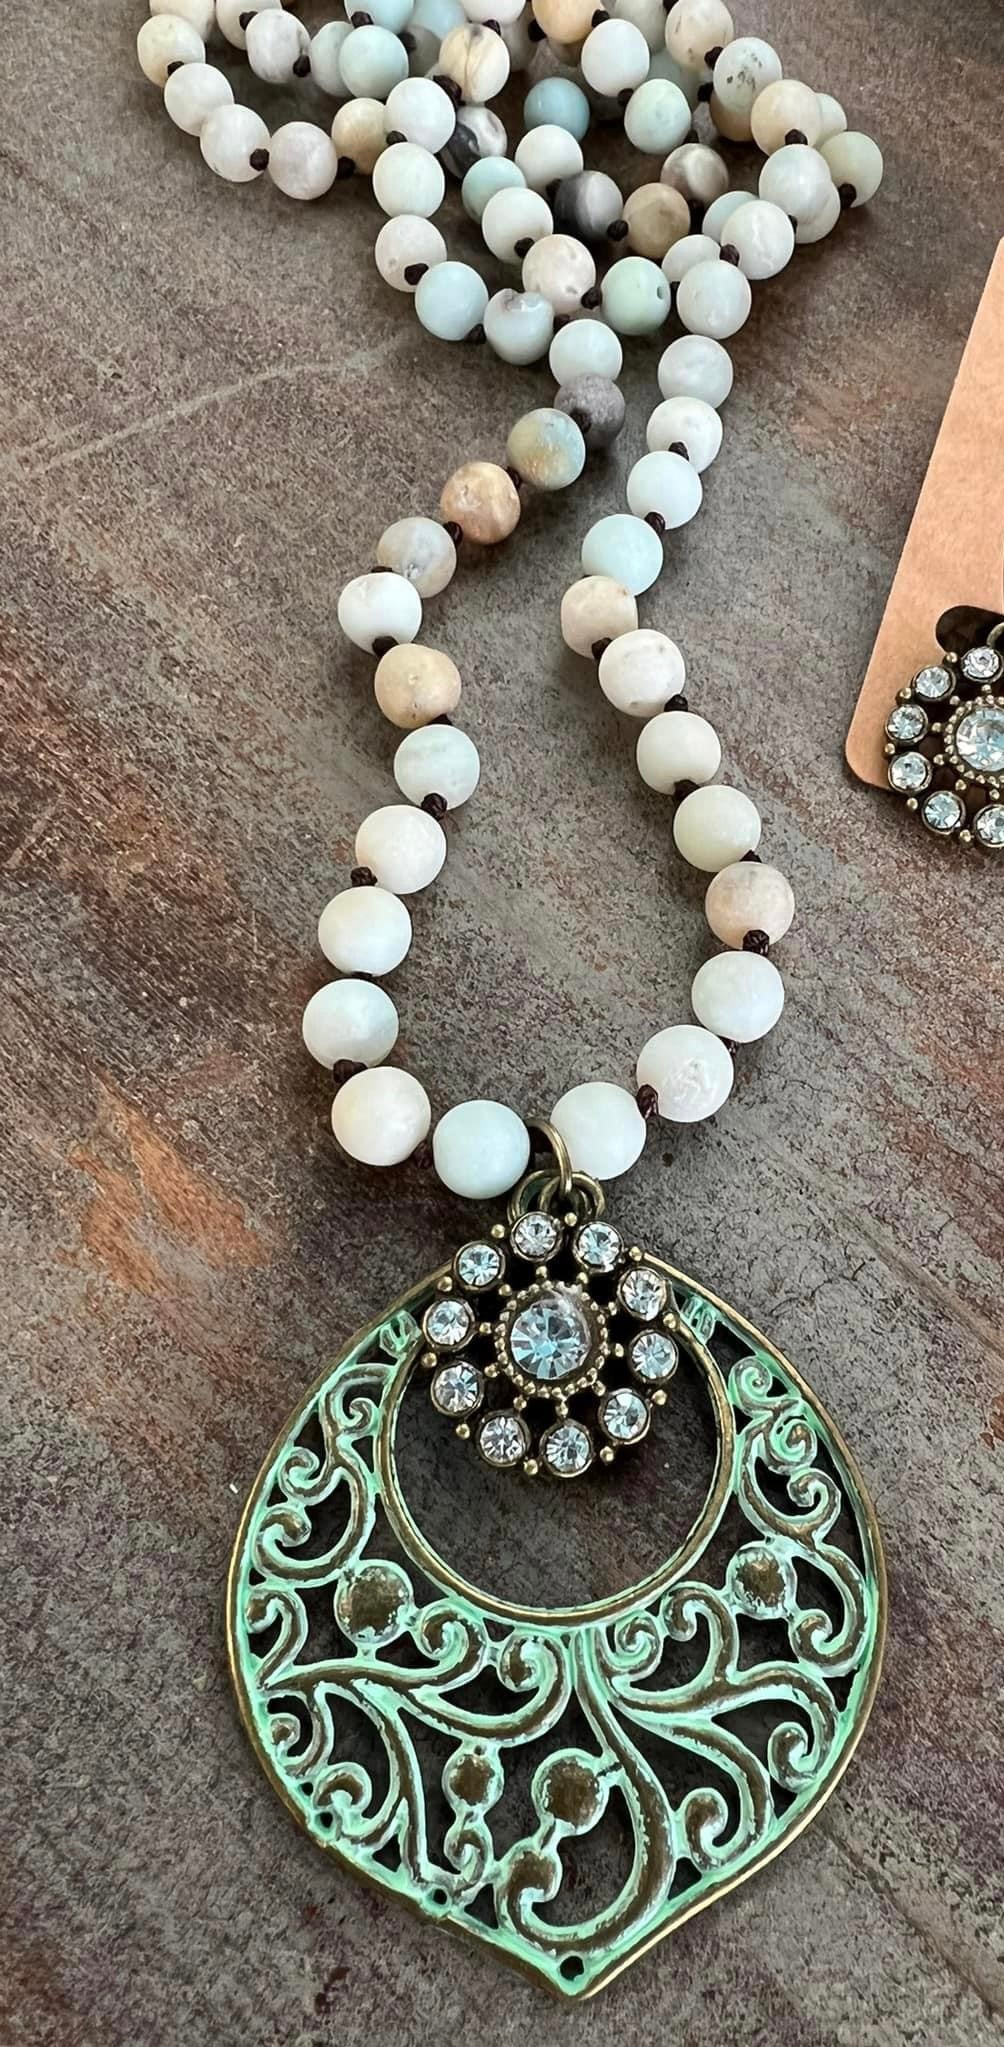 Amazonite natural stone necklace with vintage filigree stone pendant set